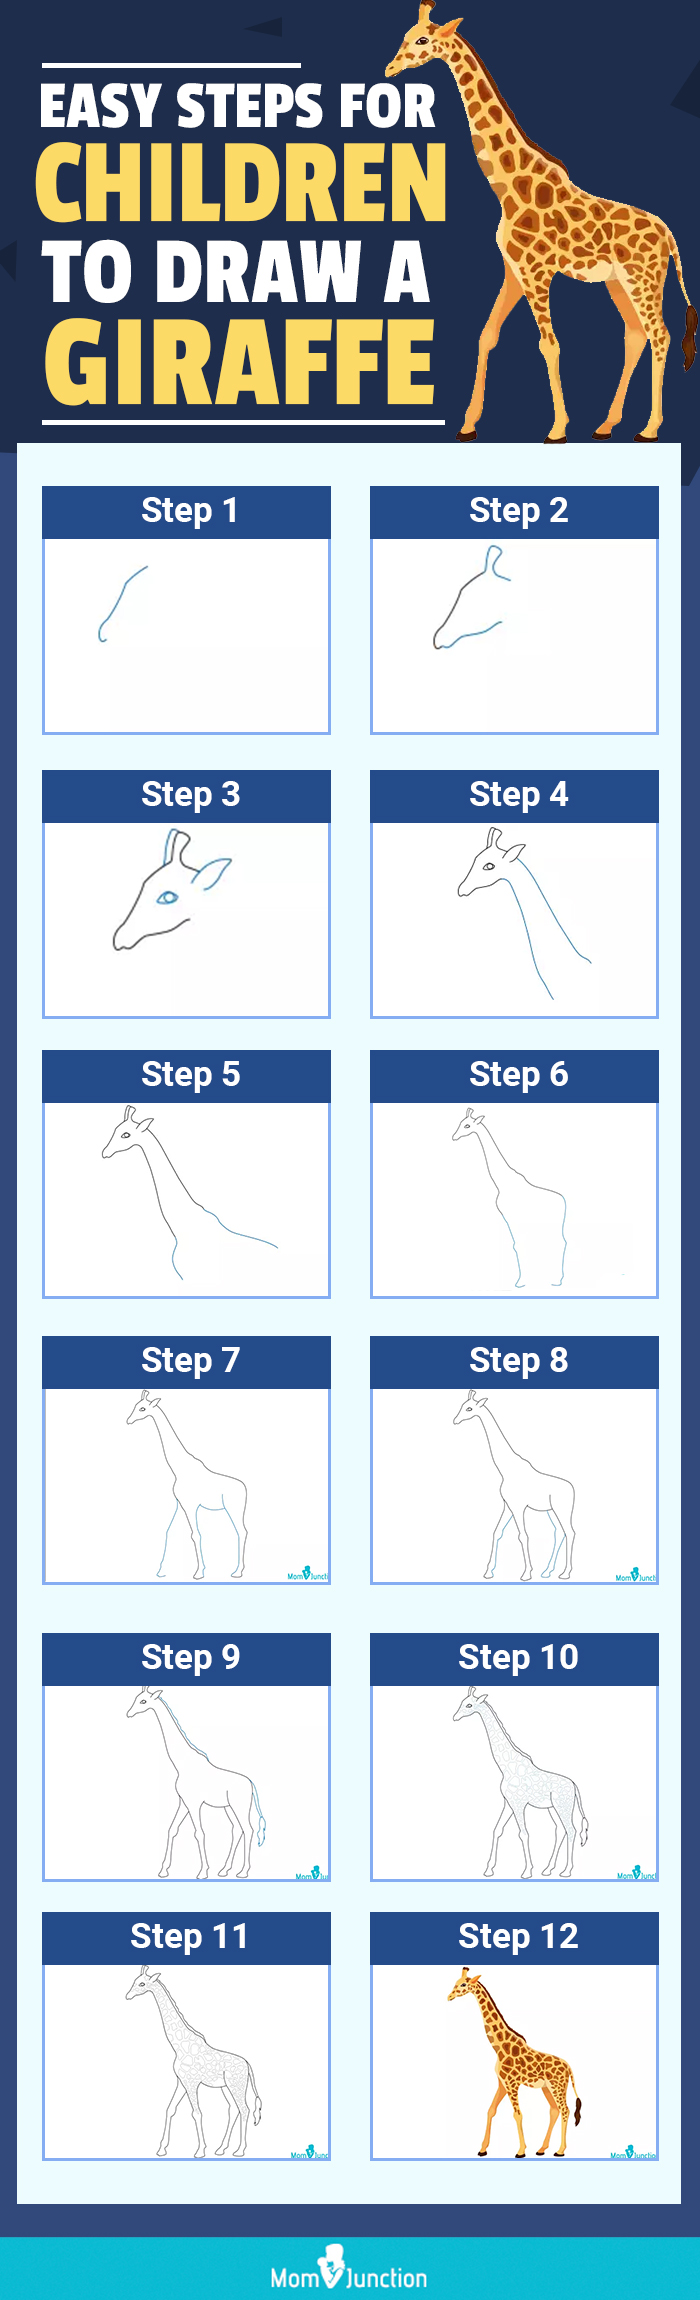 Easy Steps For Children To Draw A Giraffe